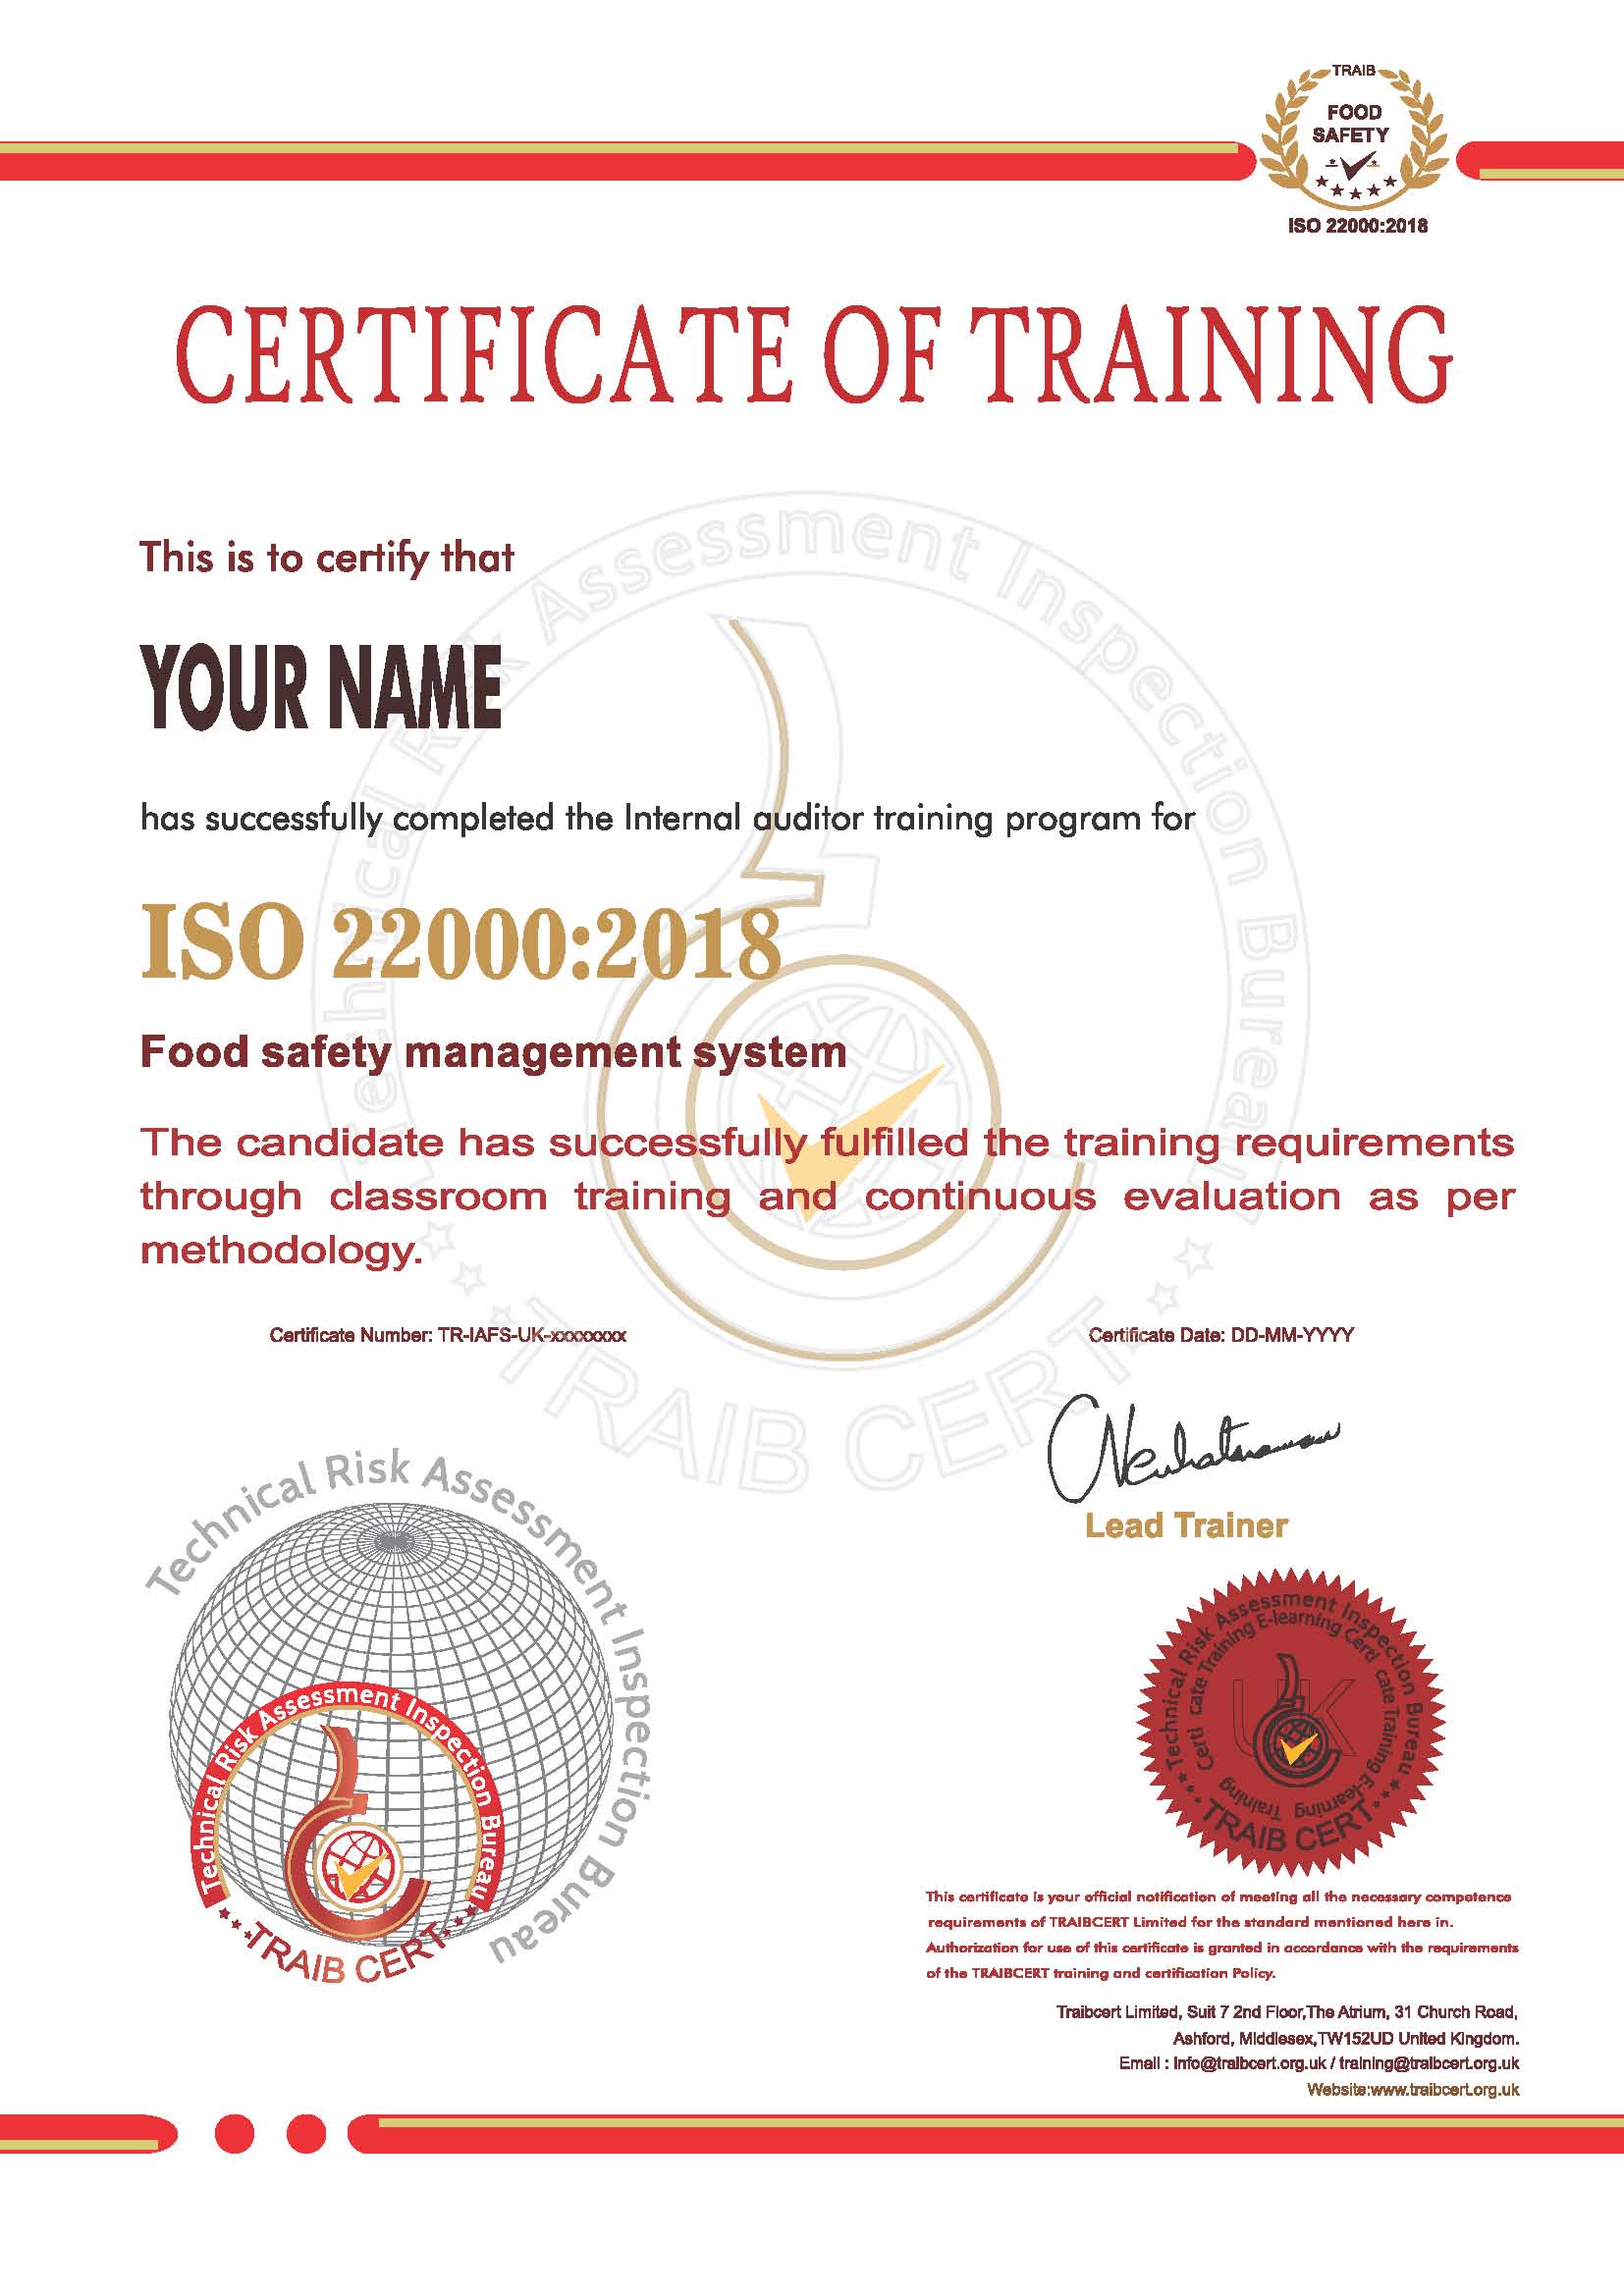 ISO 22000:2018 Internal Auditor online Training module elearning in